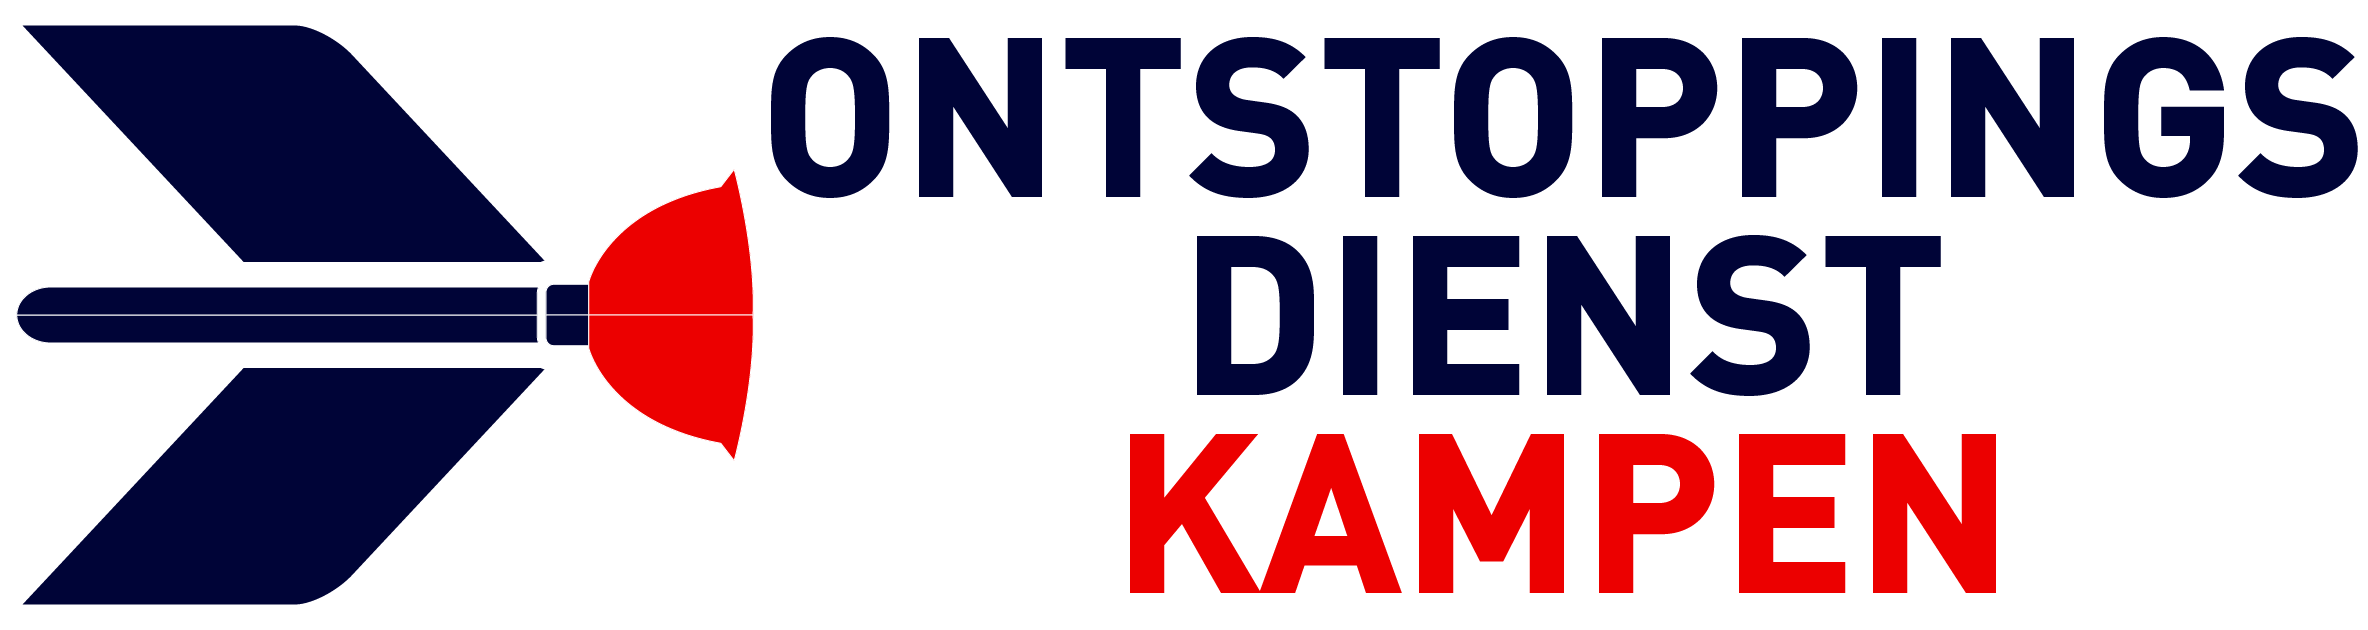 Ontstoppingsdienst Kampen logo